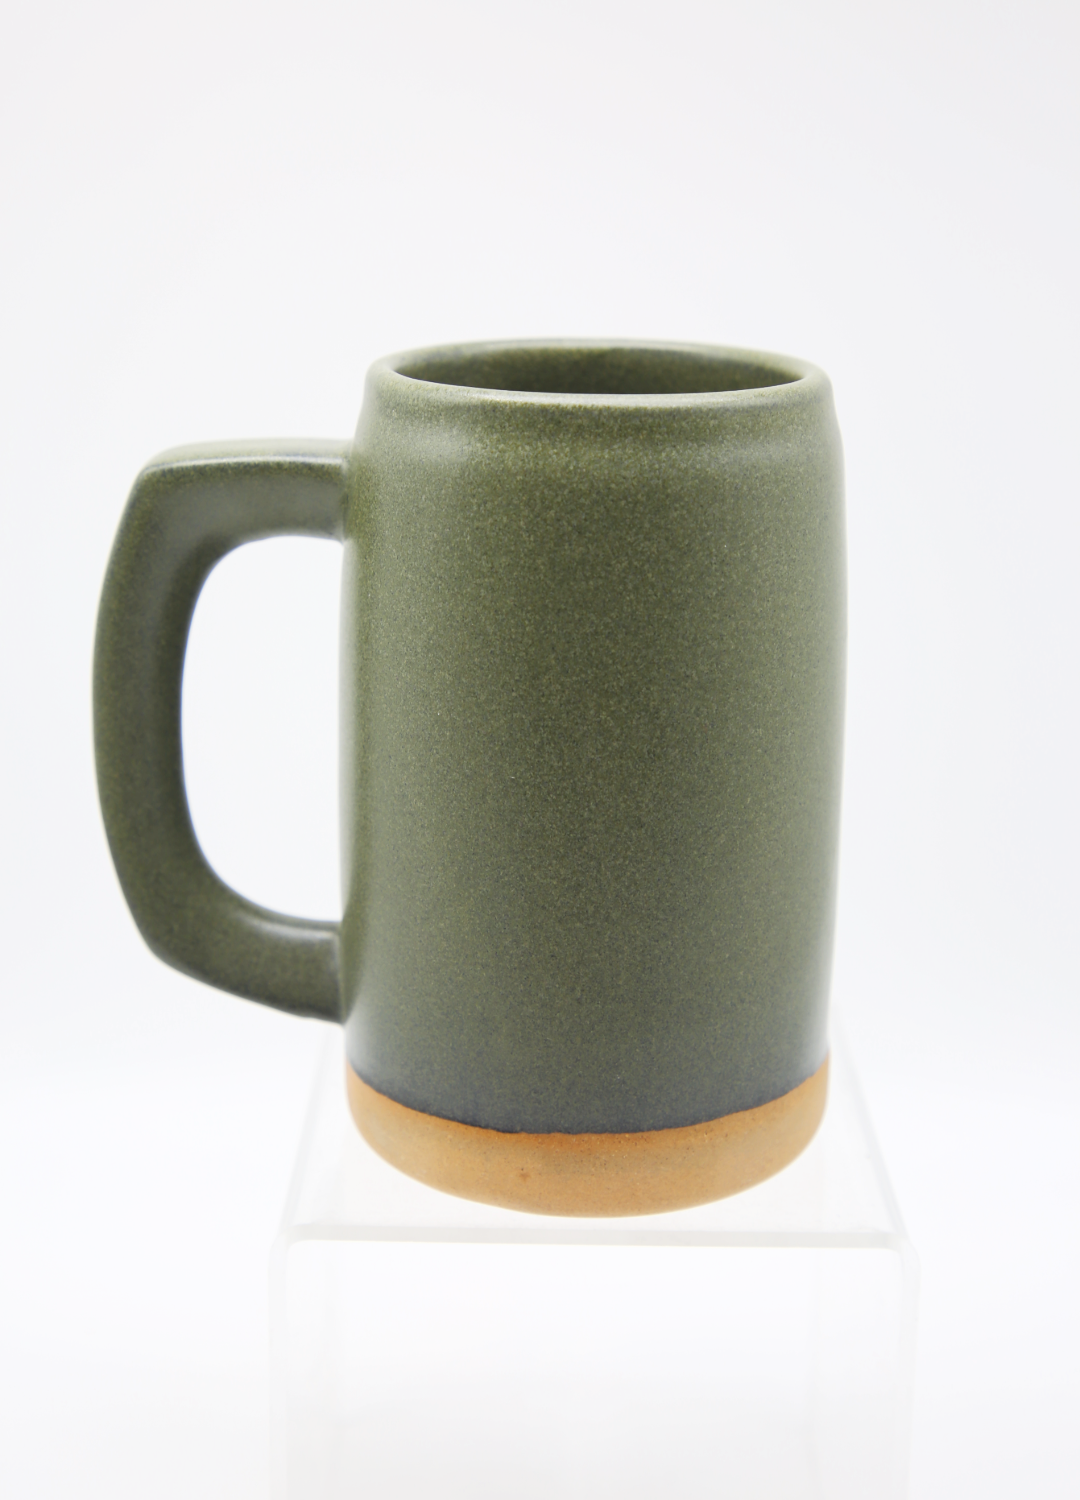 Handmade Ceramic Stein Mug in Olive Green